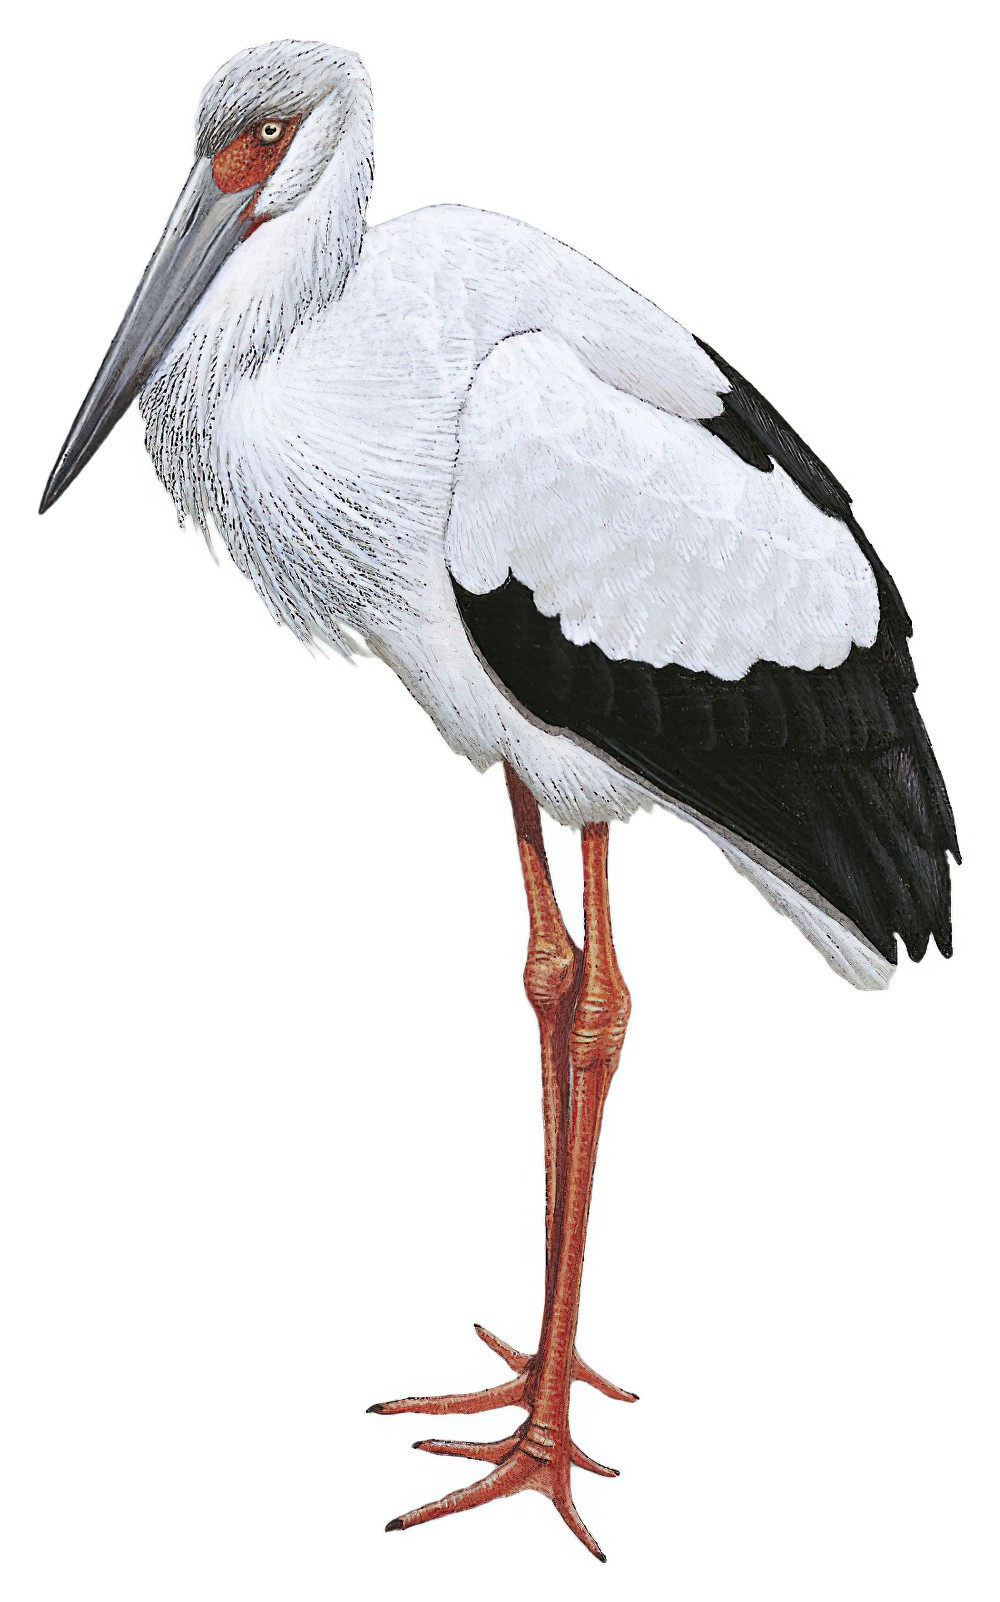 Maguari Stork / Ciconia maguari